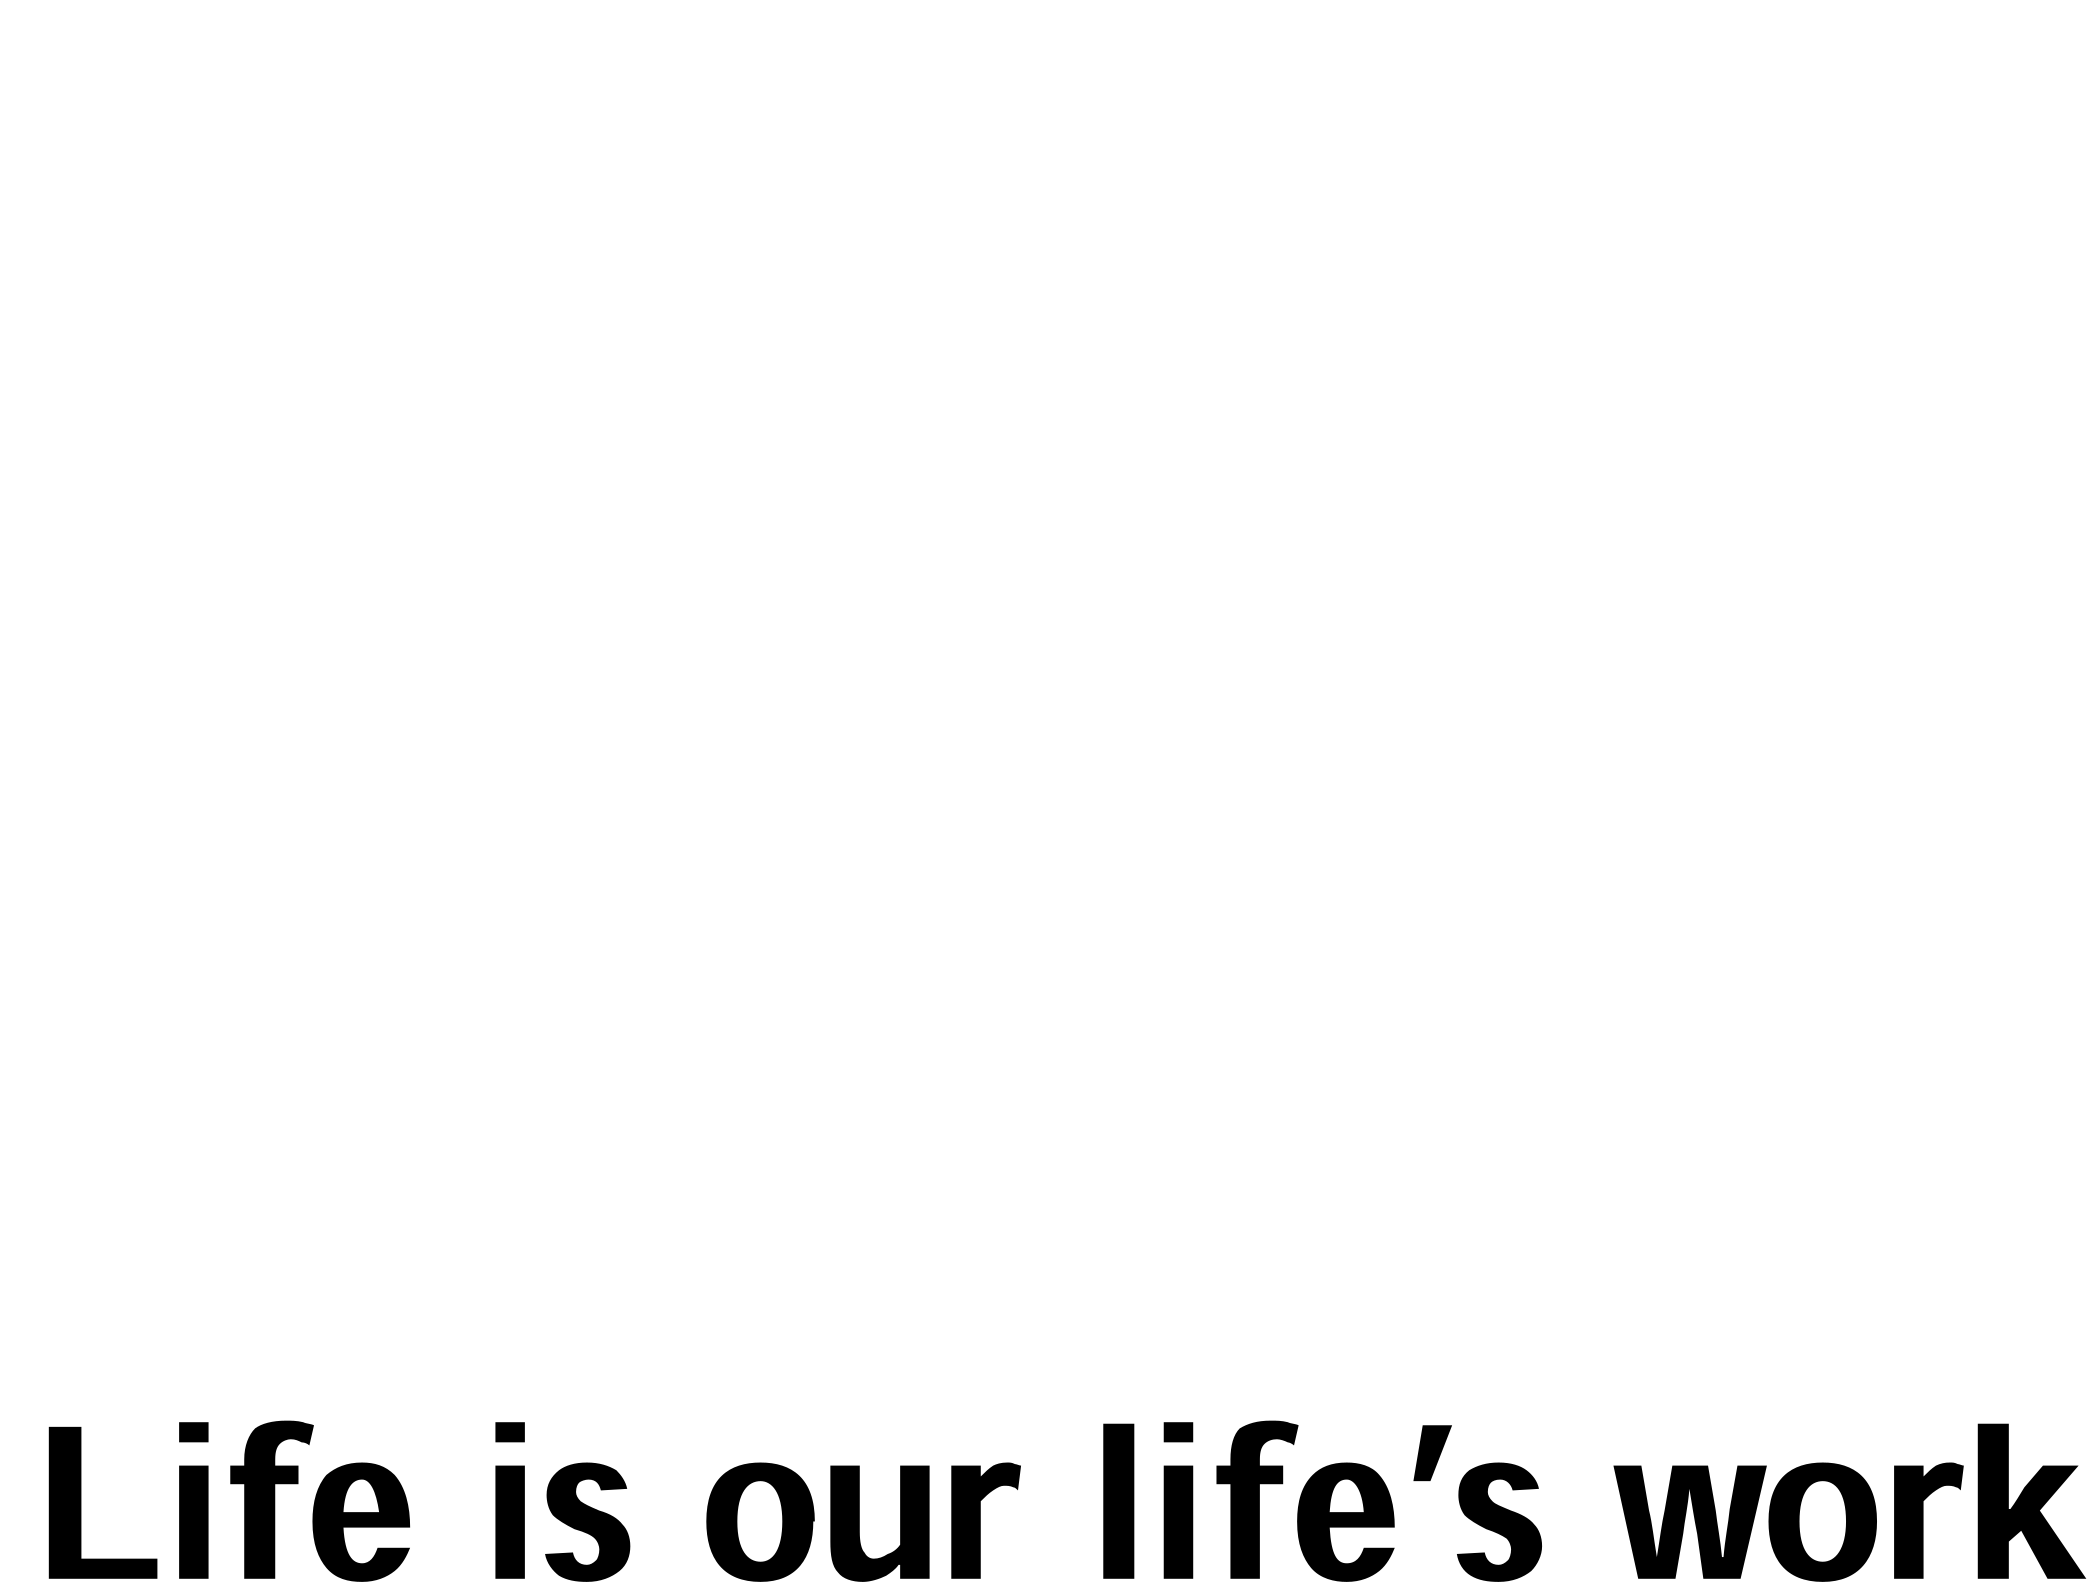 Download Pfizer Logo Black And White   Pfizer Logo   Full Size Png Pluspng.com  - Pfizer, Transparent background PNG HD thumbnail